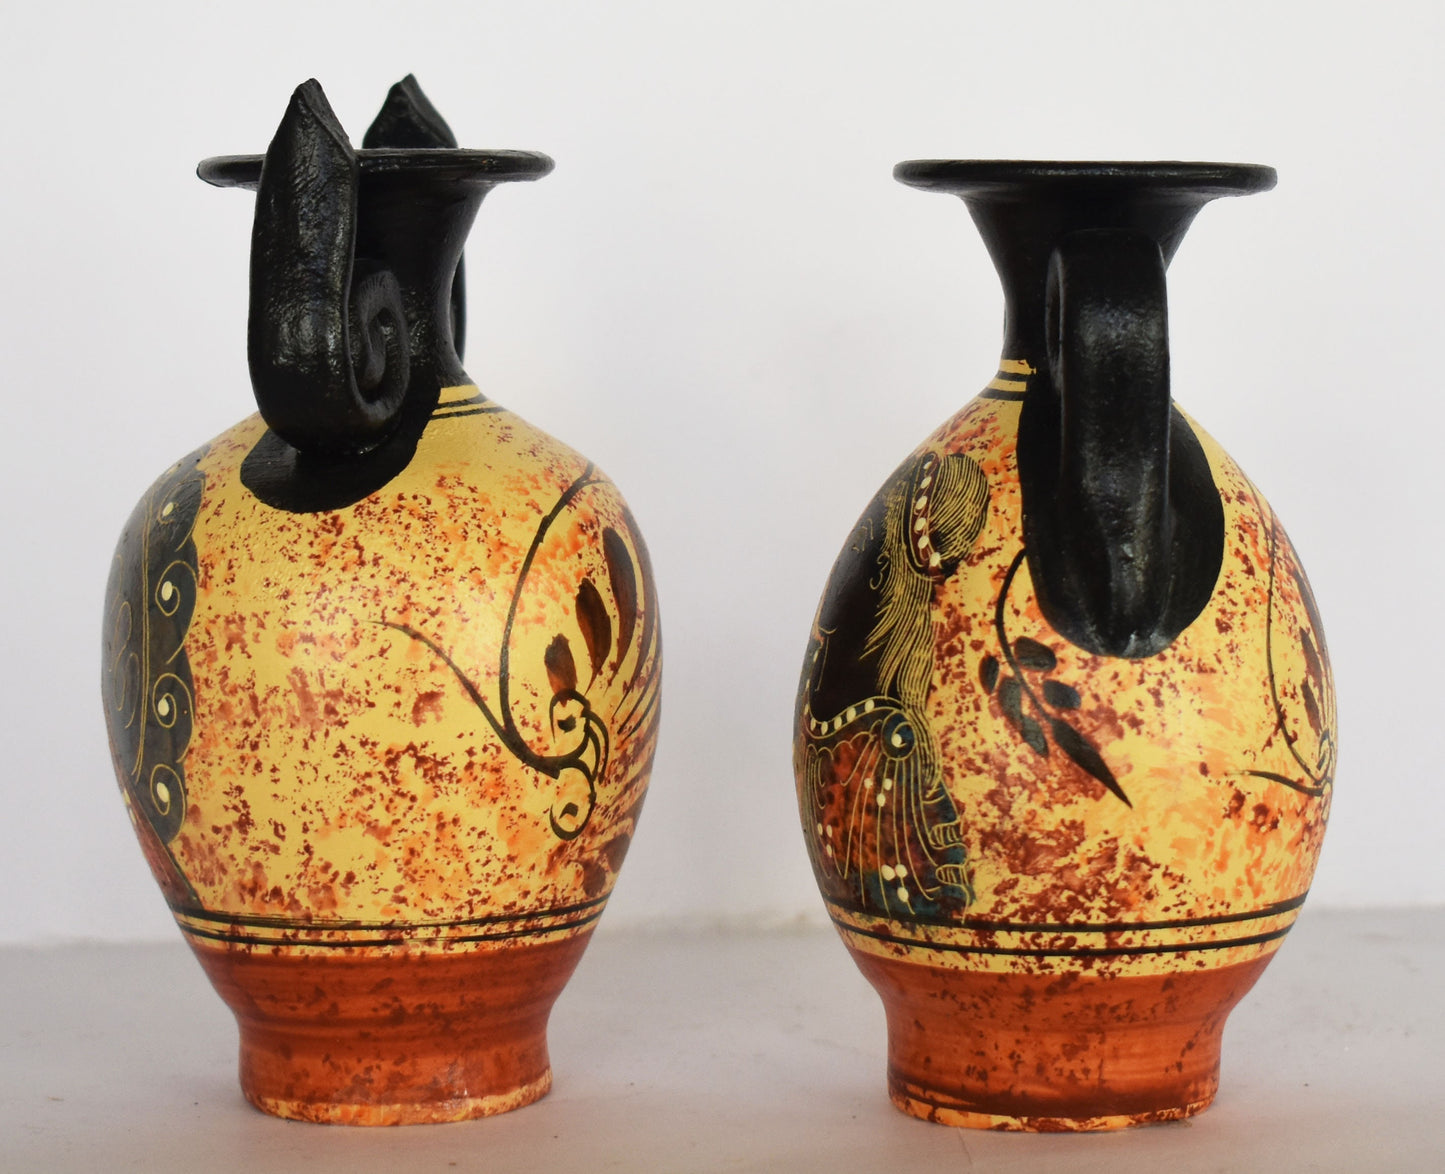 Set of 2 Small Ancient Greek Vases - Aphrodite and Apollo - Floral design - Ceramic Vessels